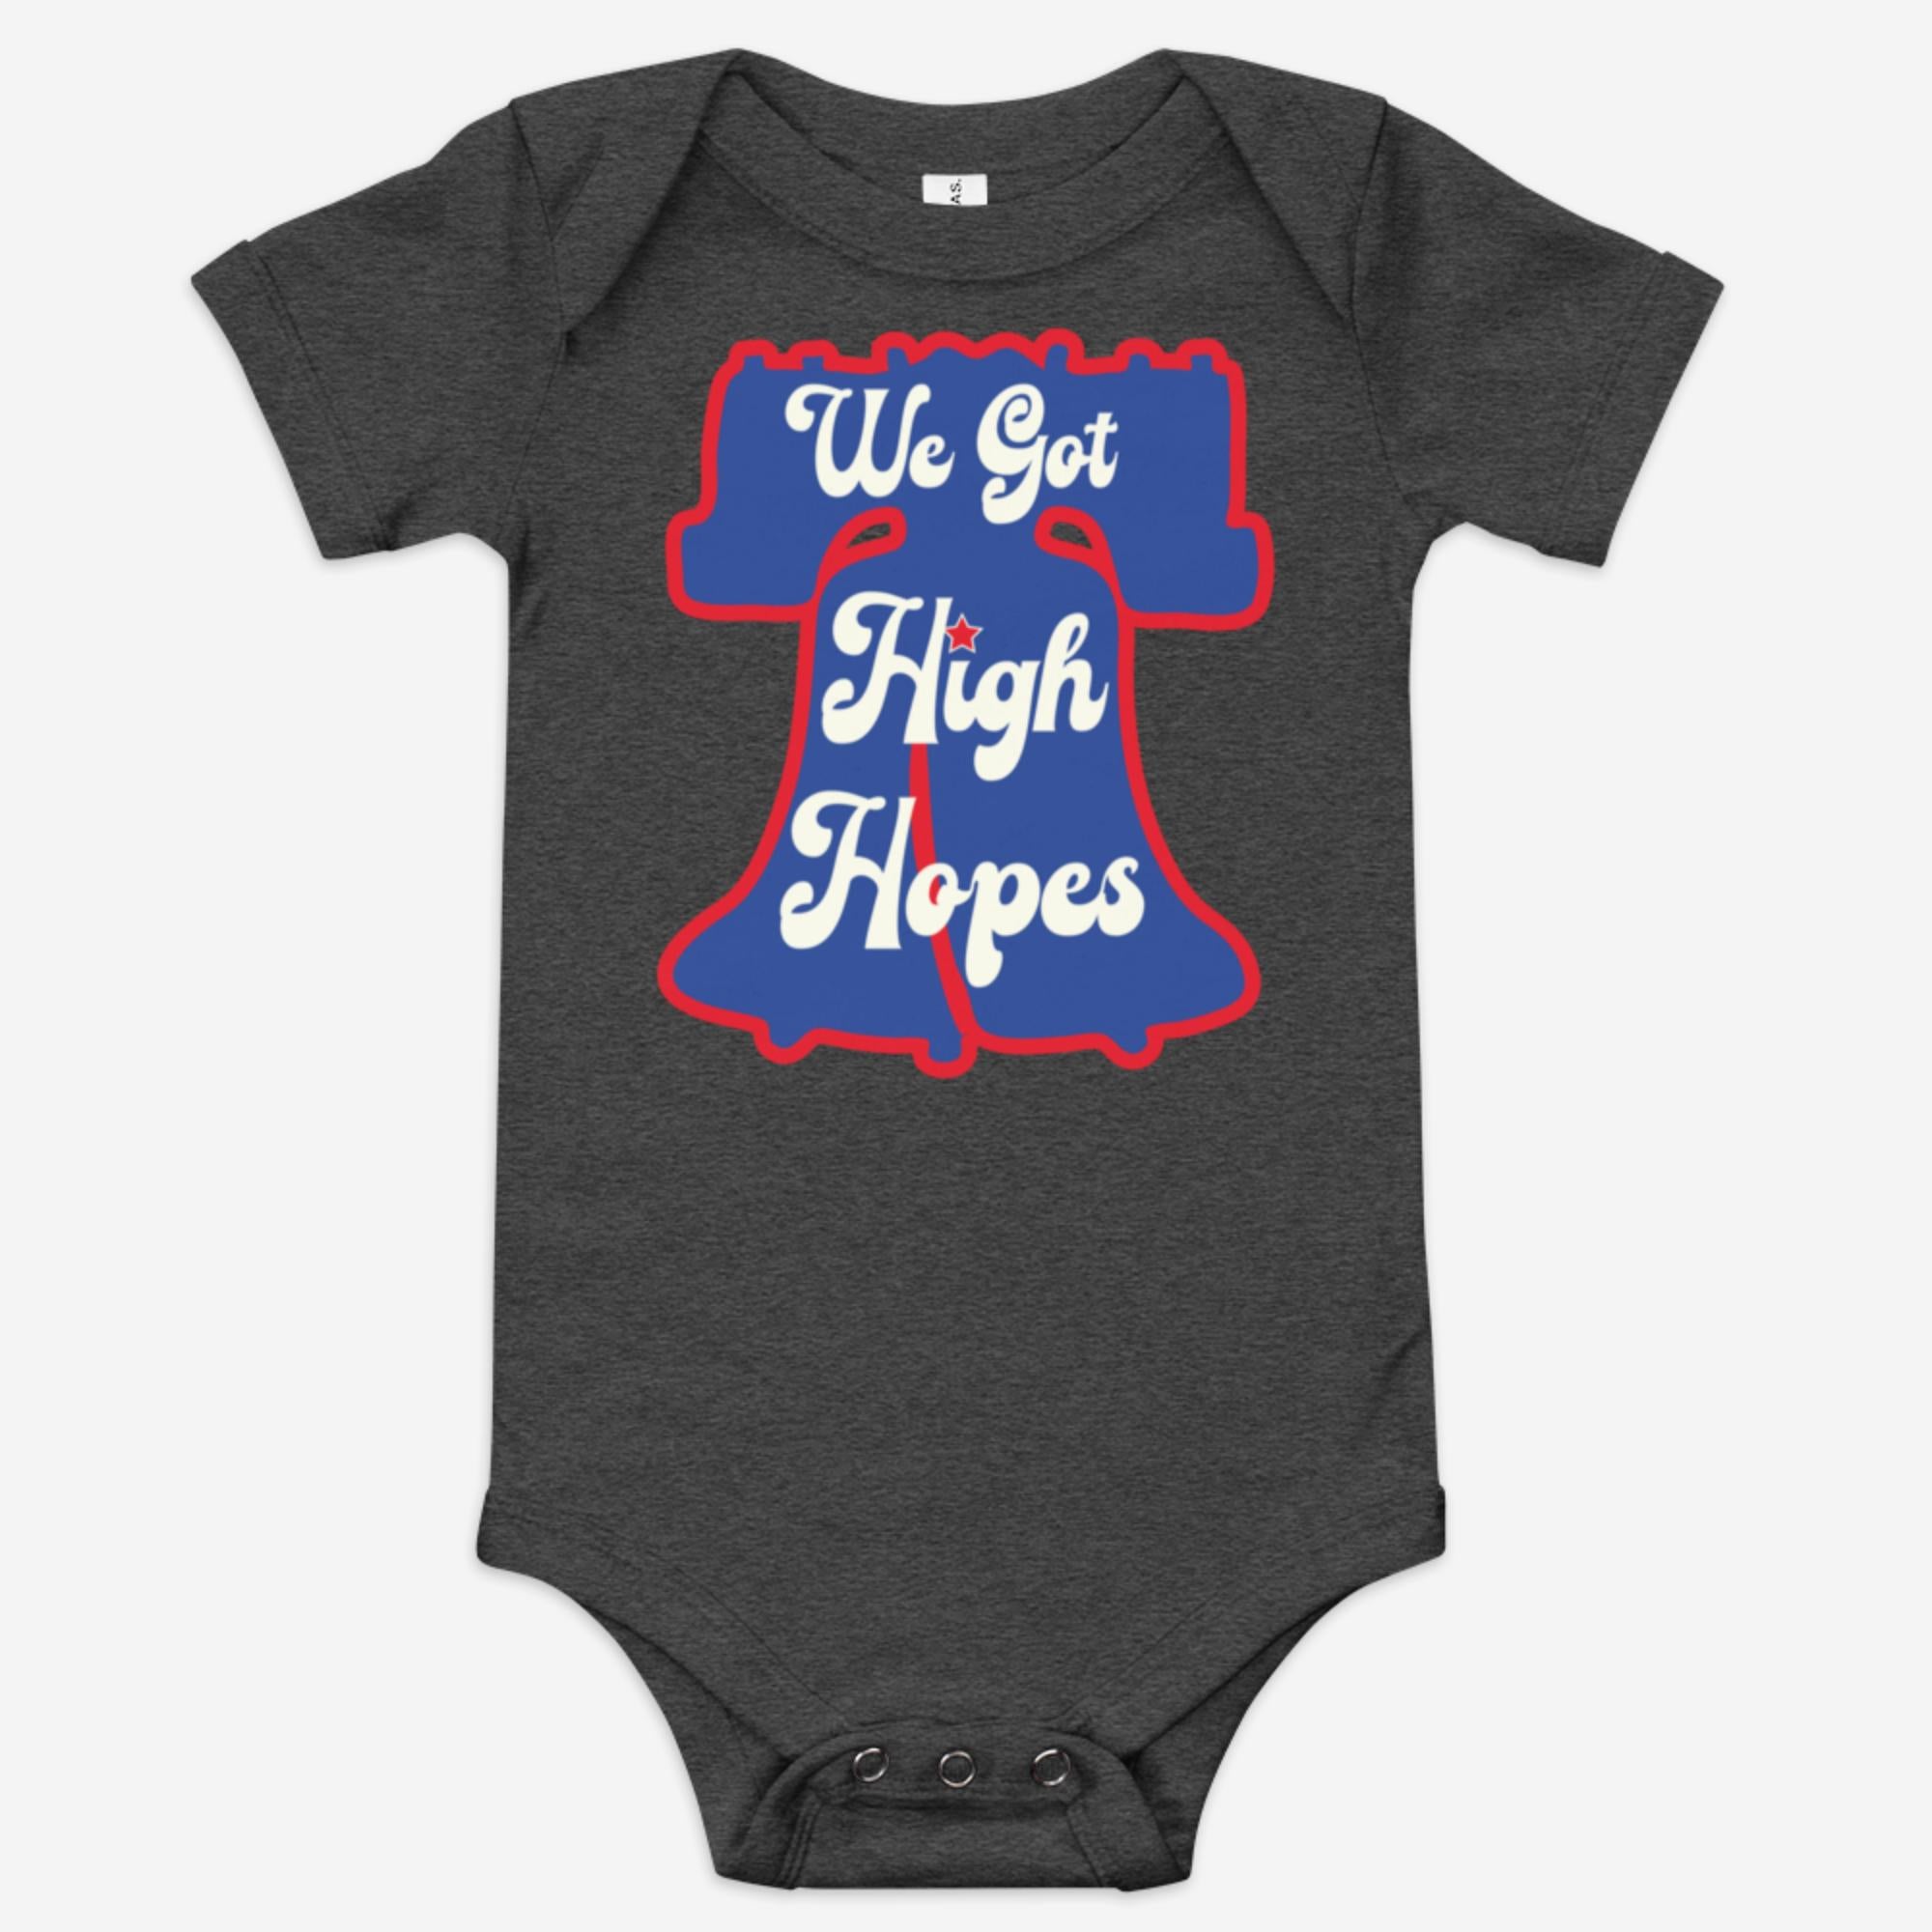 "High Hopes" Baby Onesie